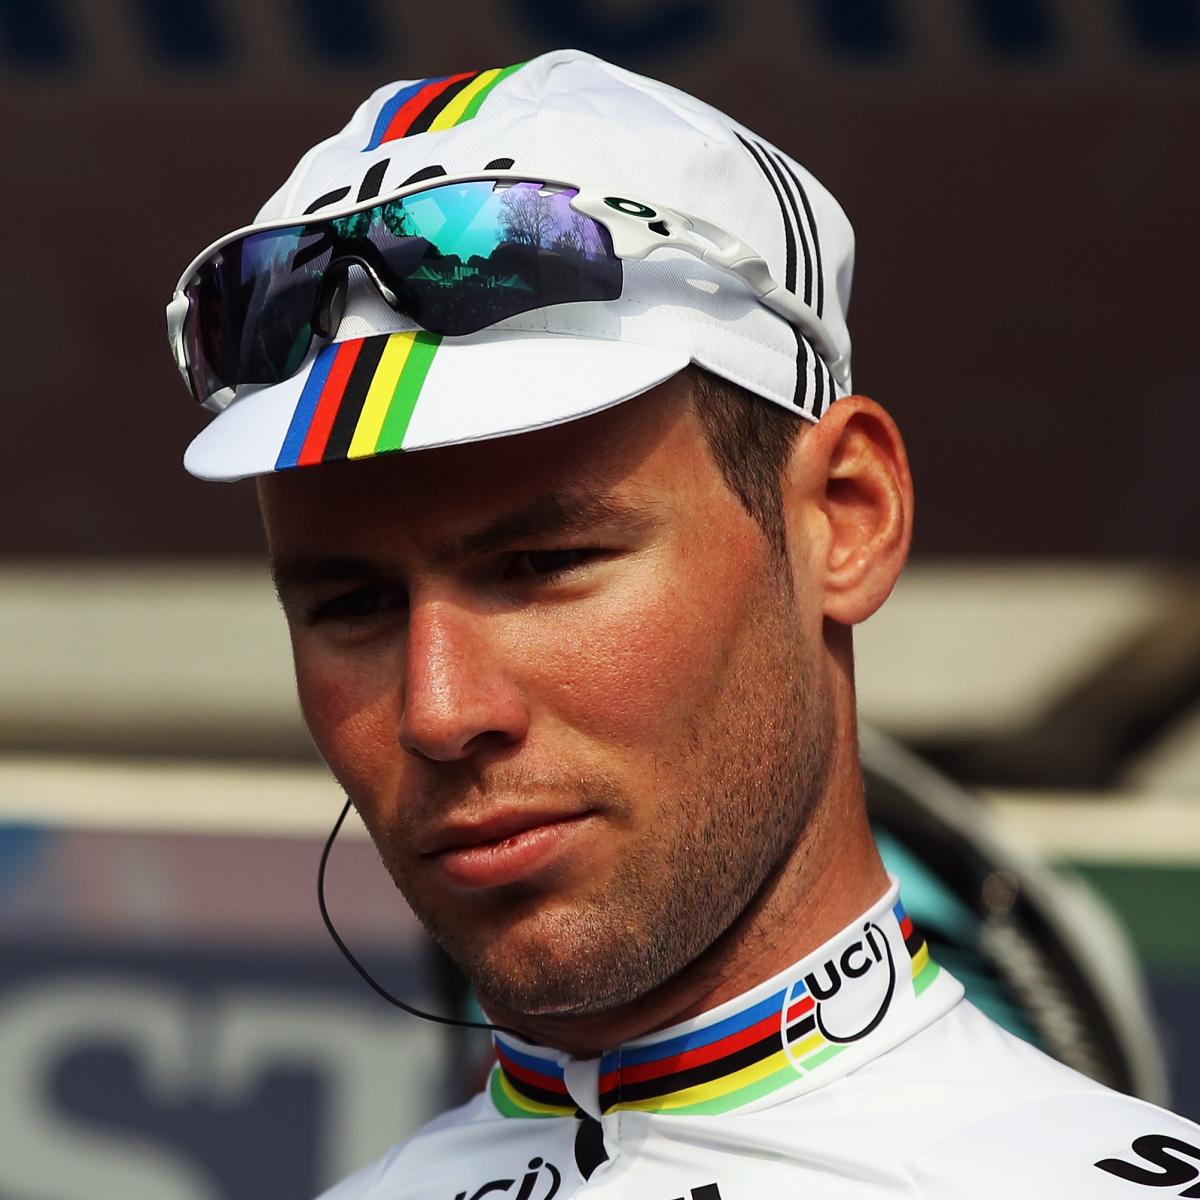 2012 Olympics: Mark Cavendish to Sacrifice Tour De France Glory to ...